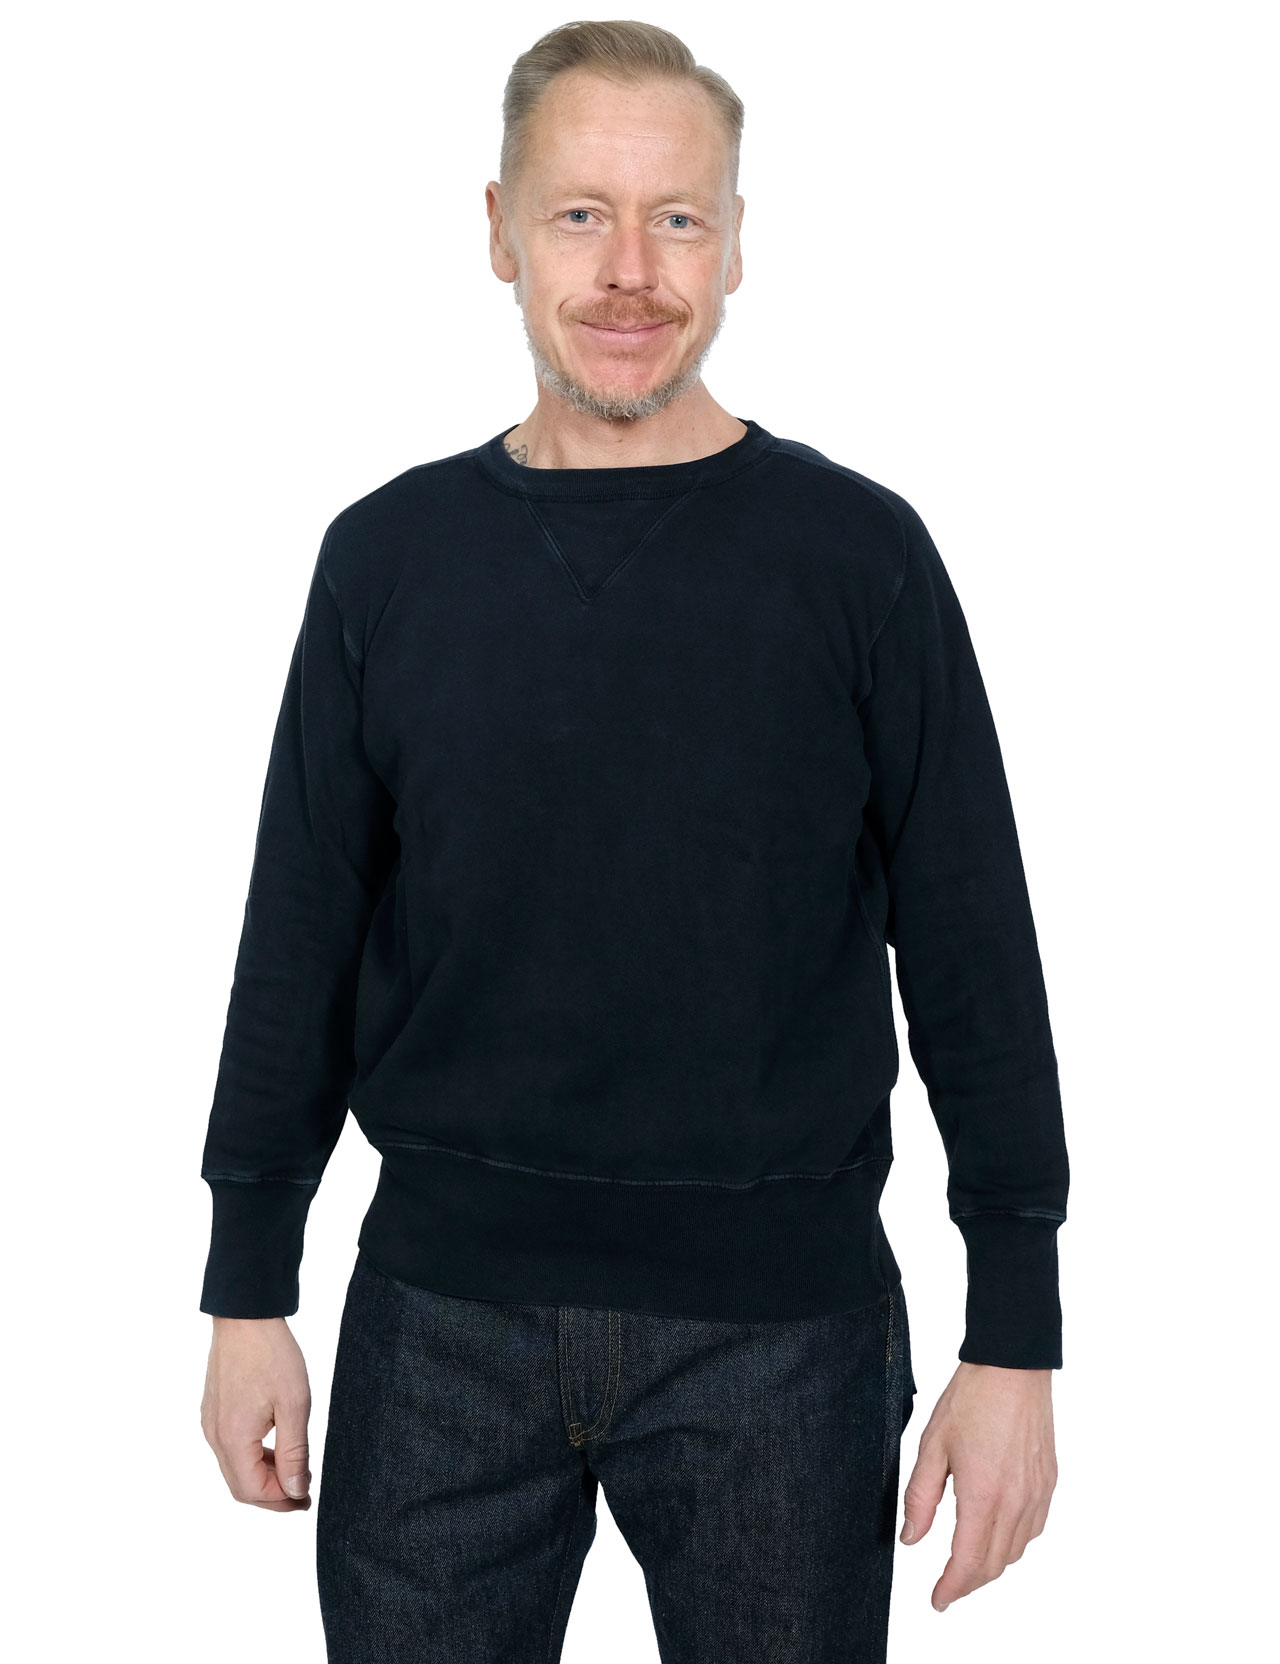 Levis Vintage Clothing - Bay Meadows Sweatshirt - Stonewashed Black